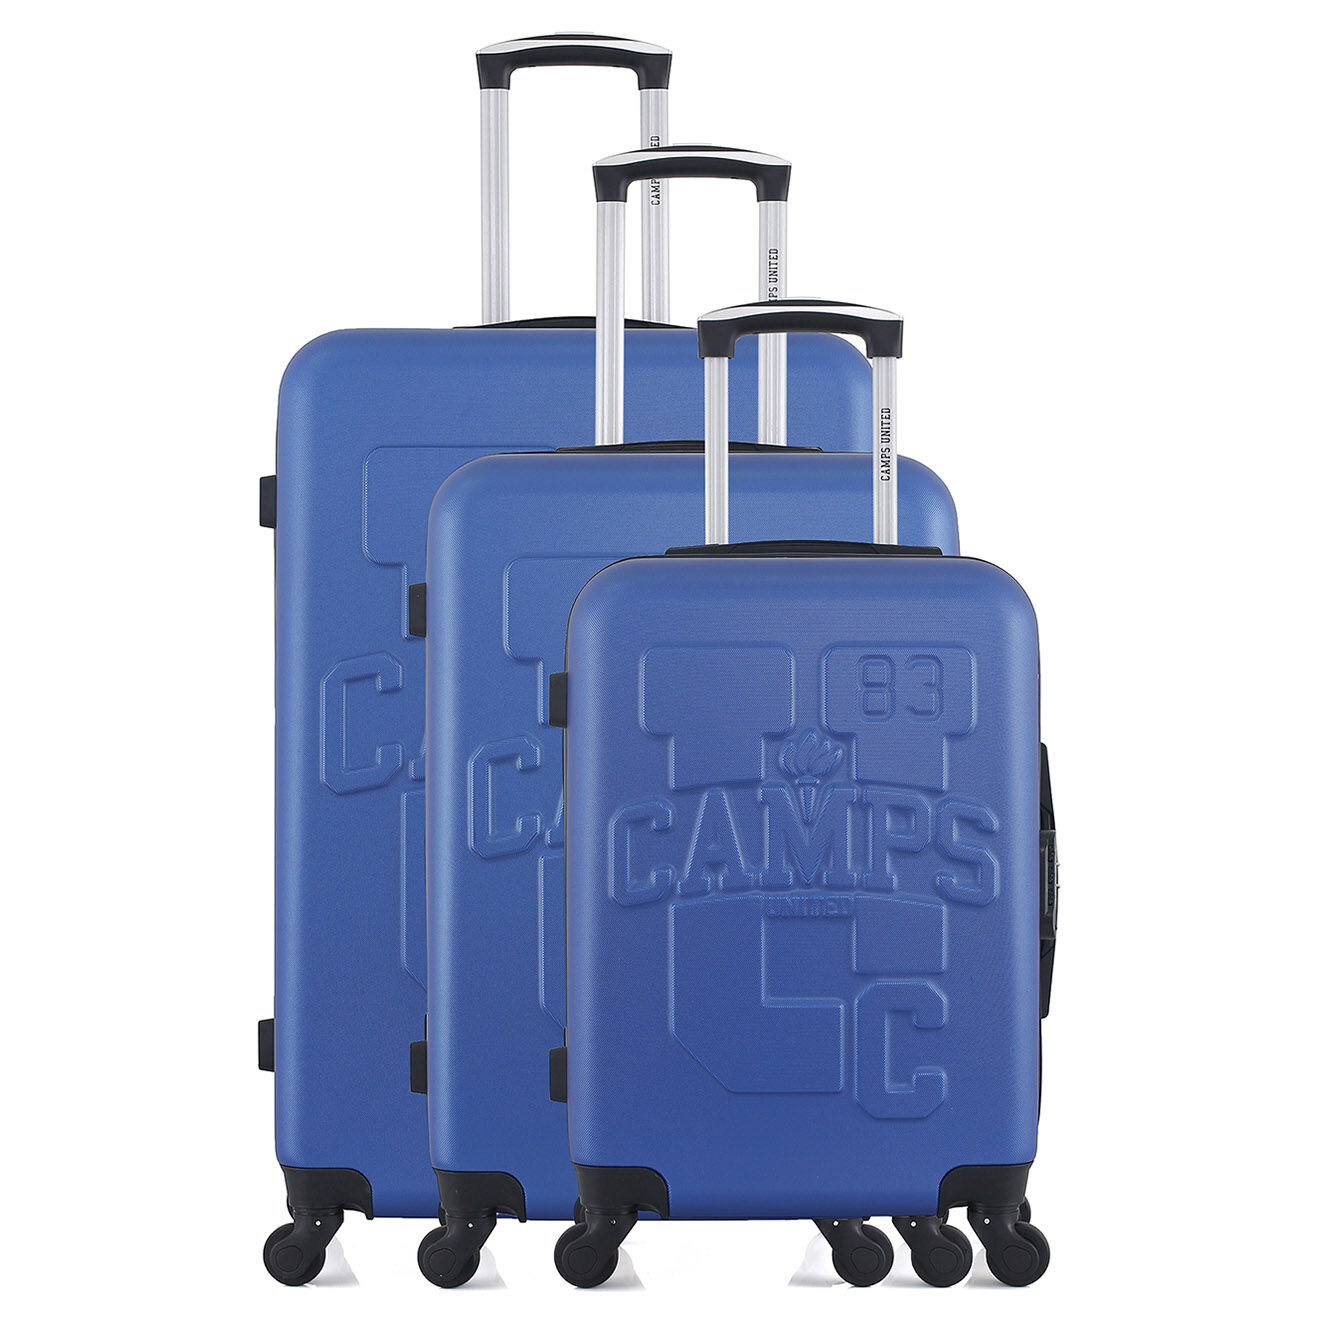 camps united - 3 valises 4 roues simples massachusetts 75/65/55 cm bleu marine